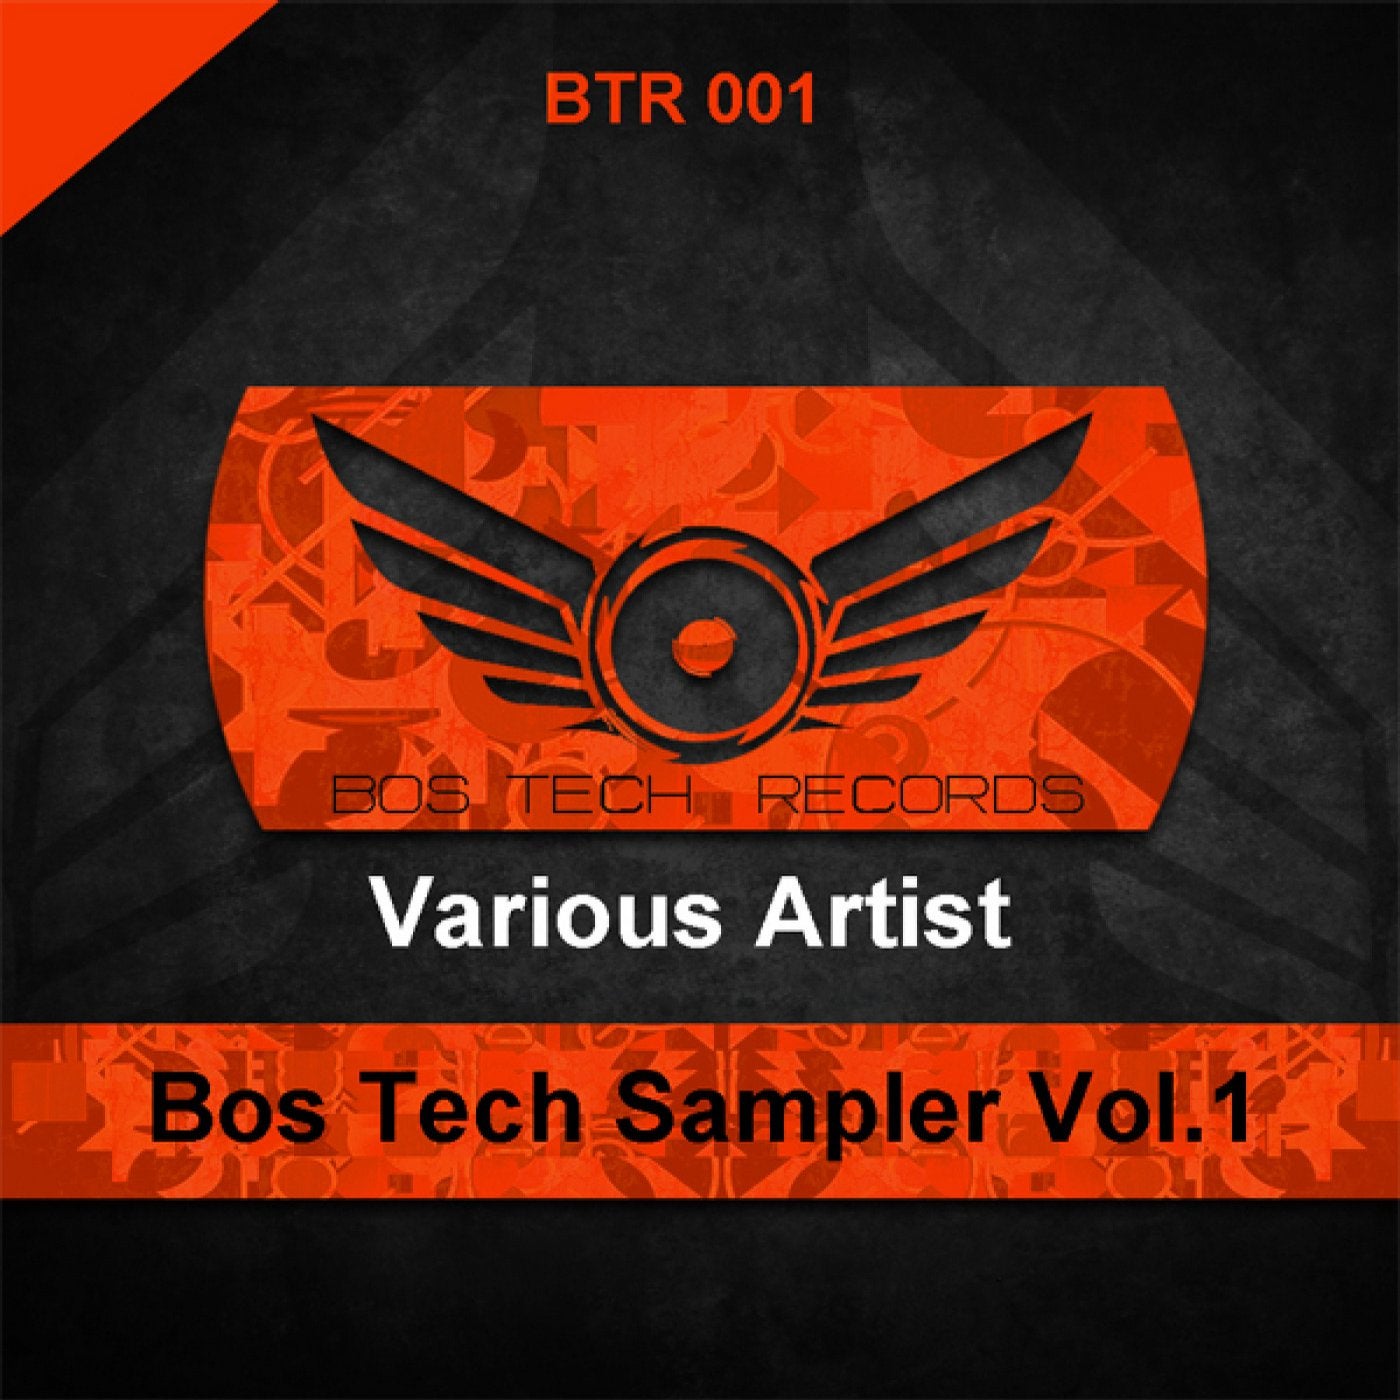 Bos Tech Sampler, Vol. 1